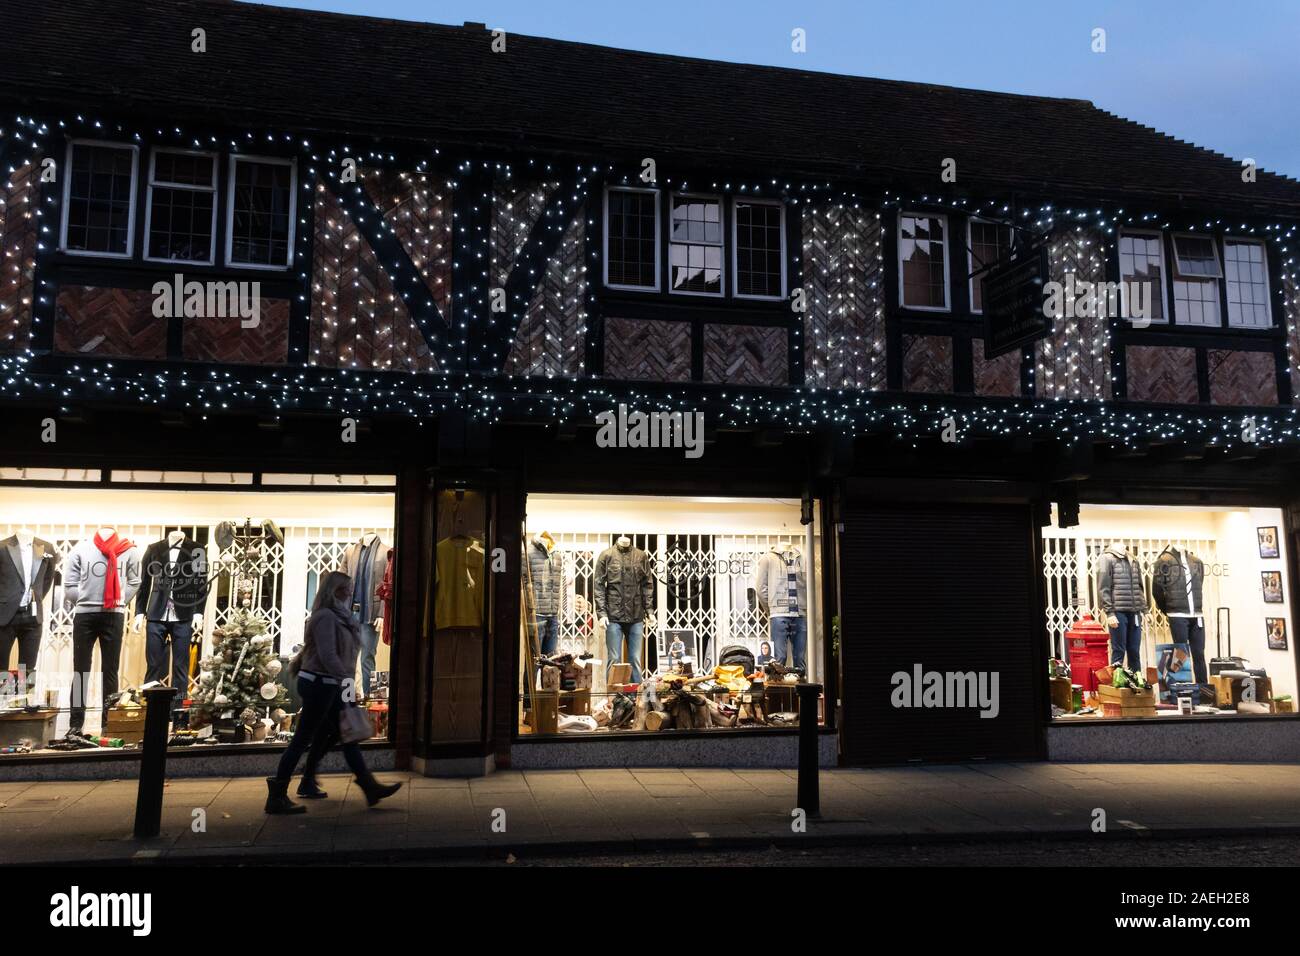 Weihnachtsbeleuchtung in Farnham, Surrey, Großbritannien. John goodridge Herrenmode shop Exterieur. Stockfoto